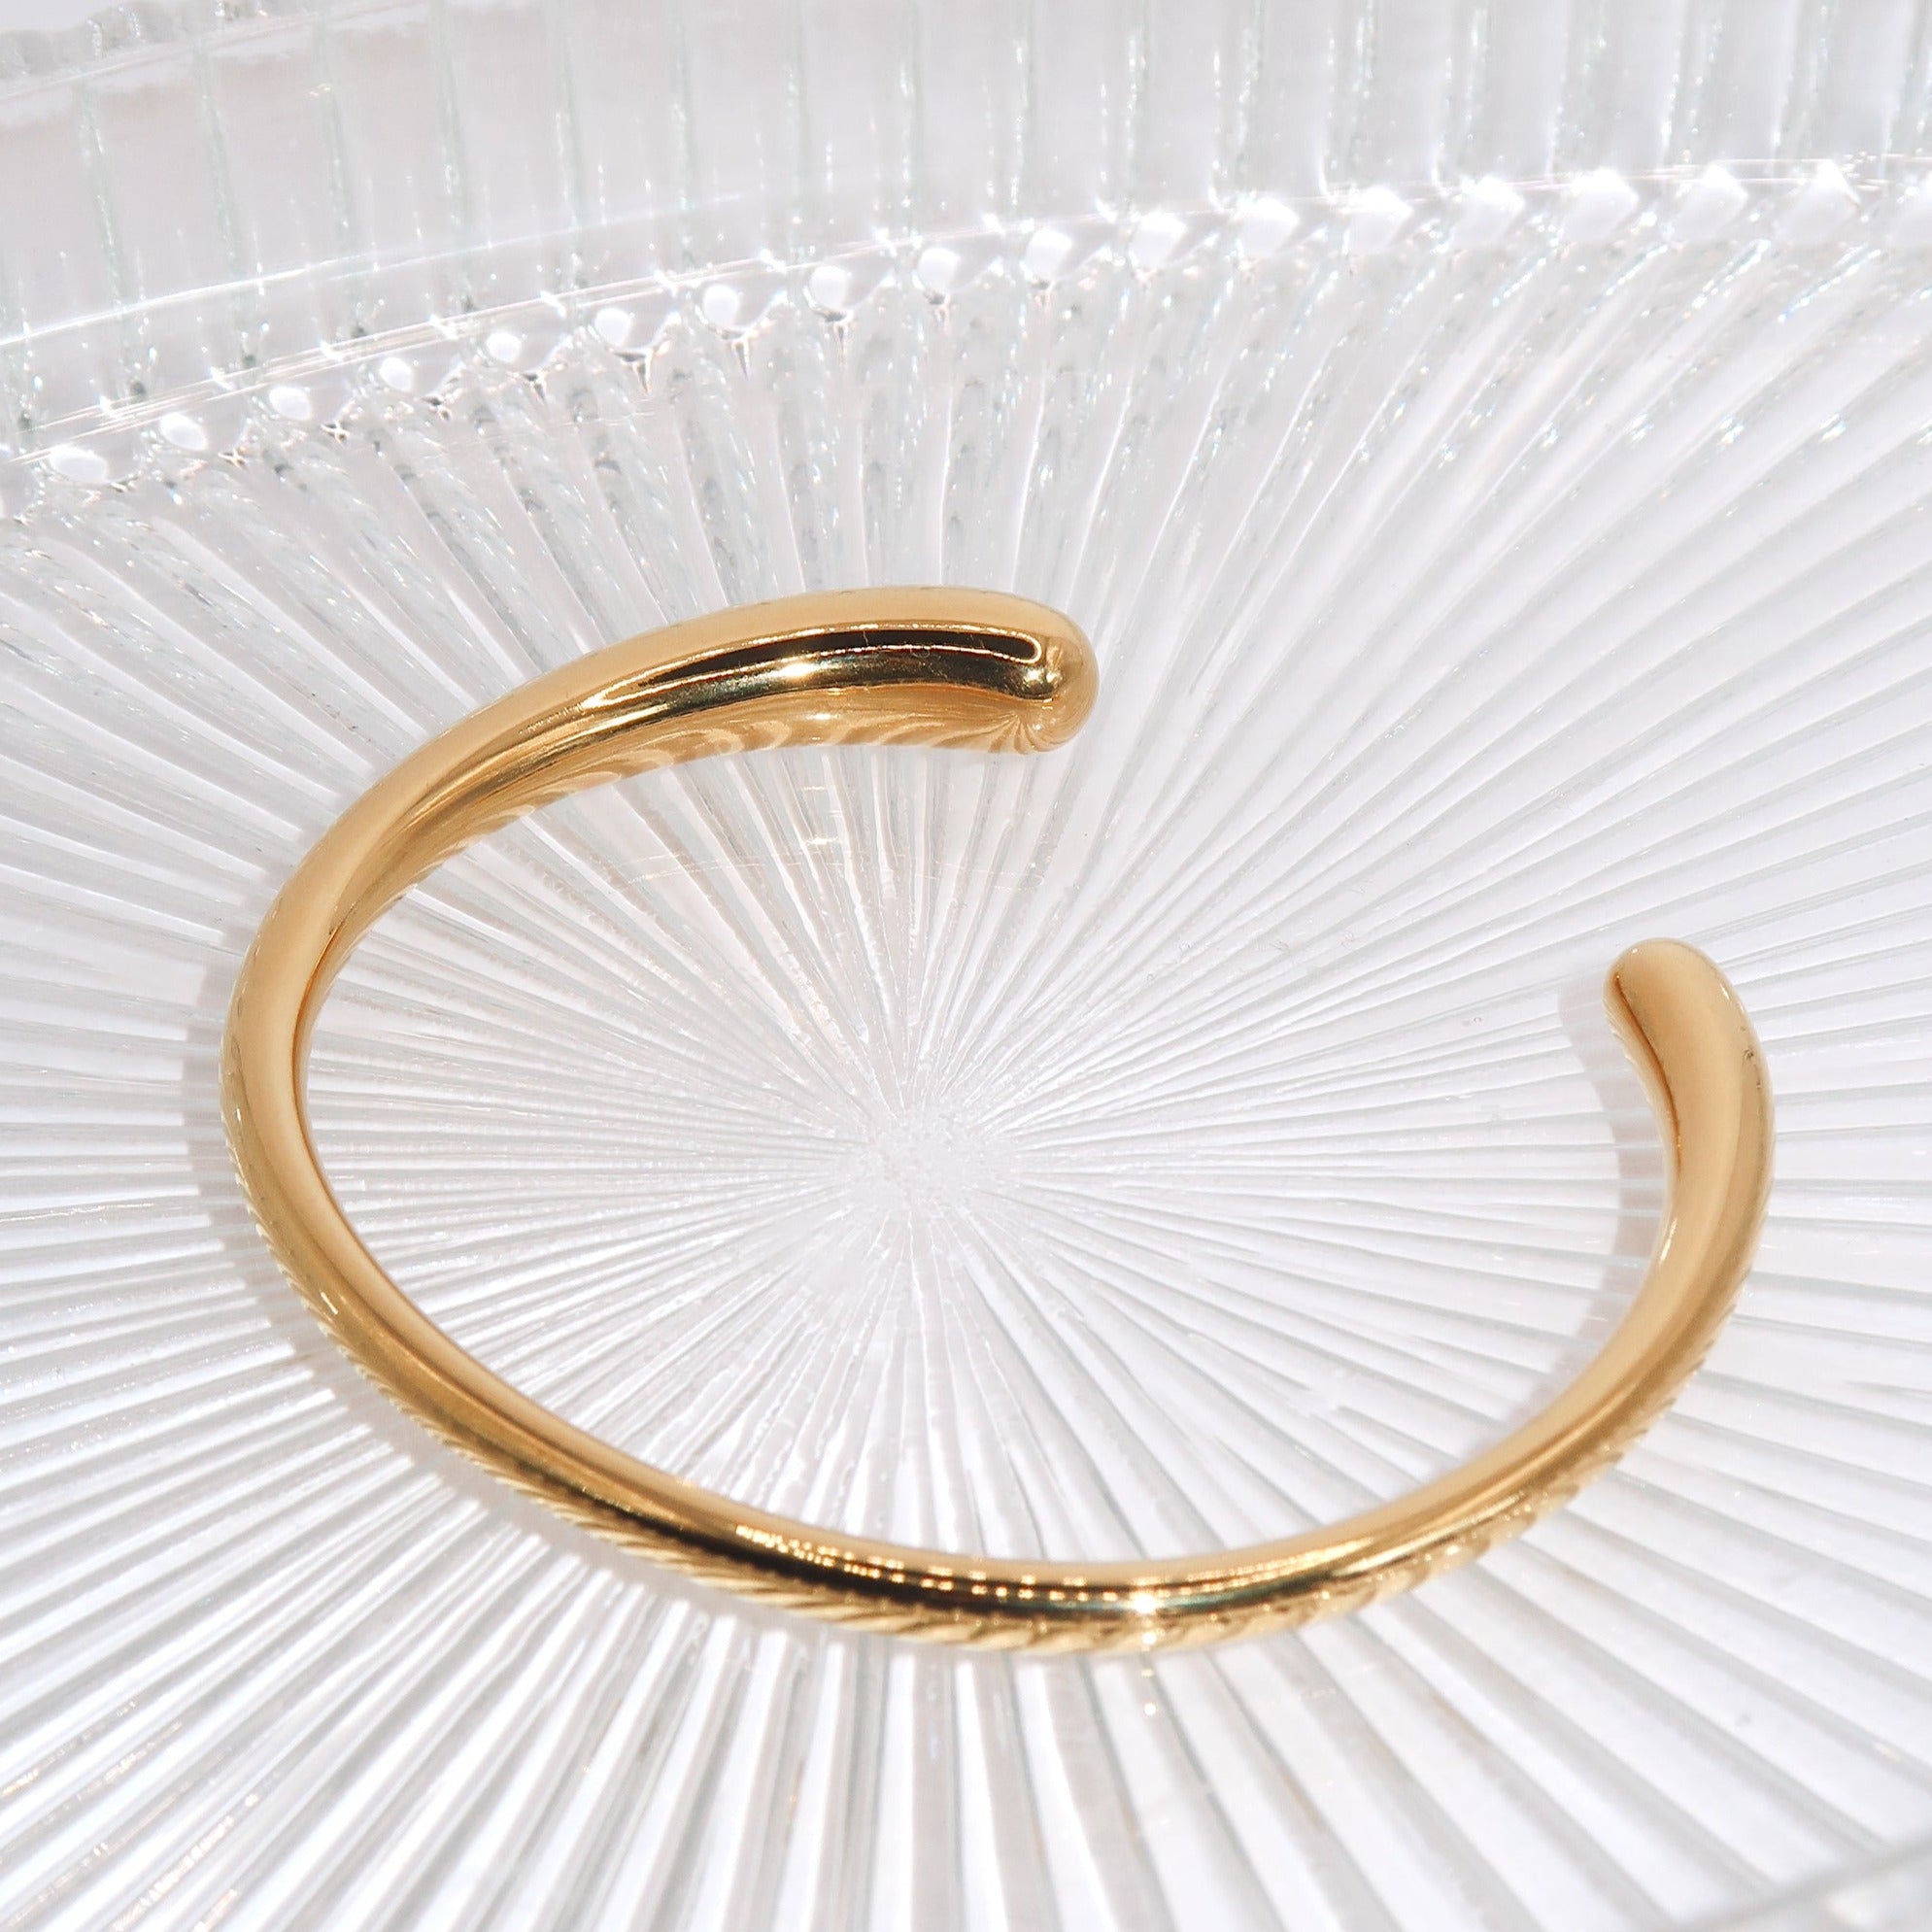 NAOMI - 18K PVD Gold Plated Adjustable Cuff Bracelet - Mixed Metals